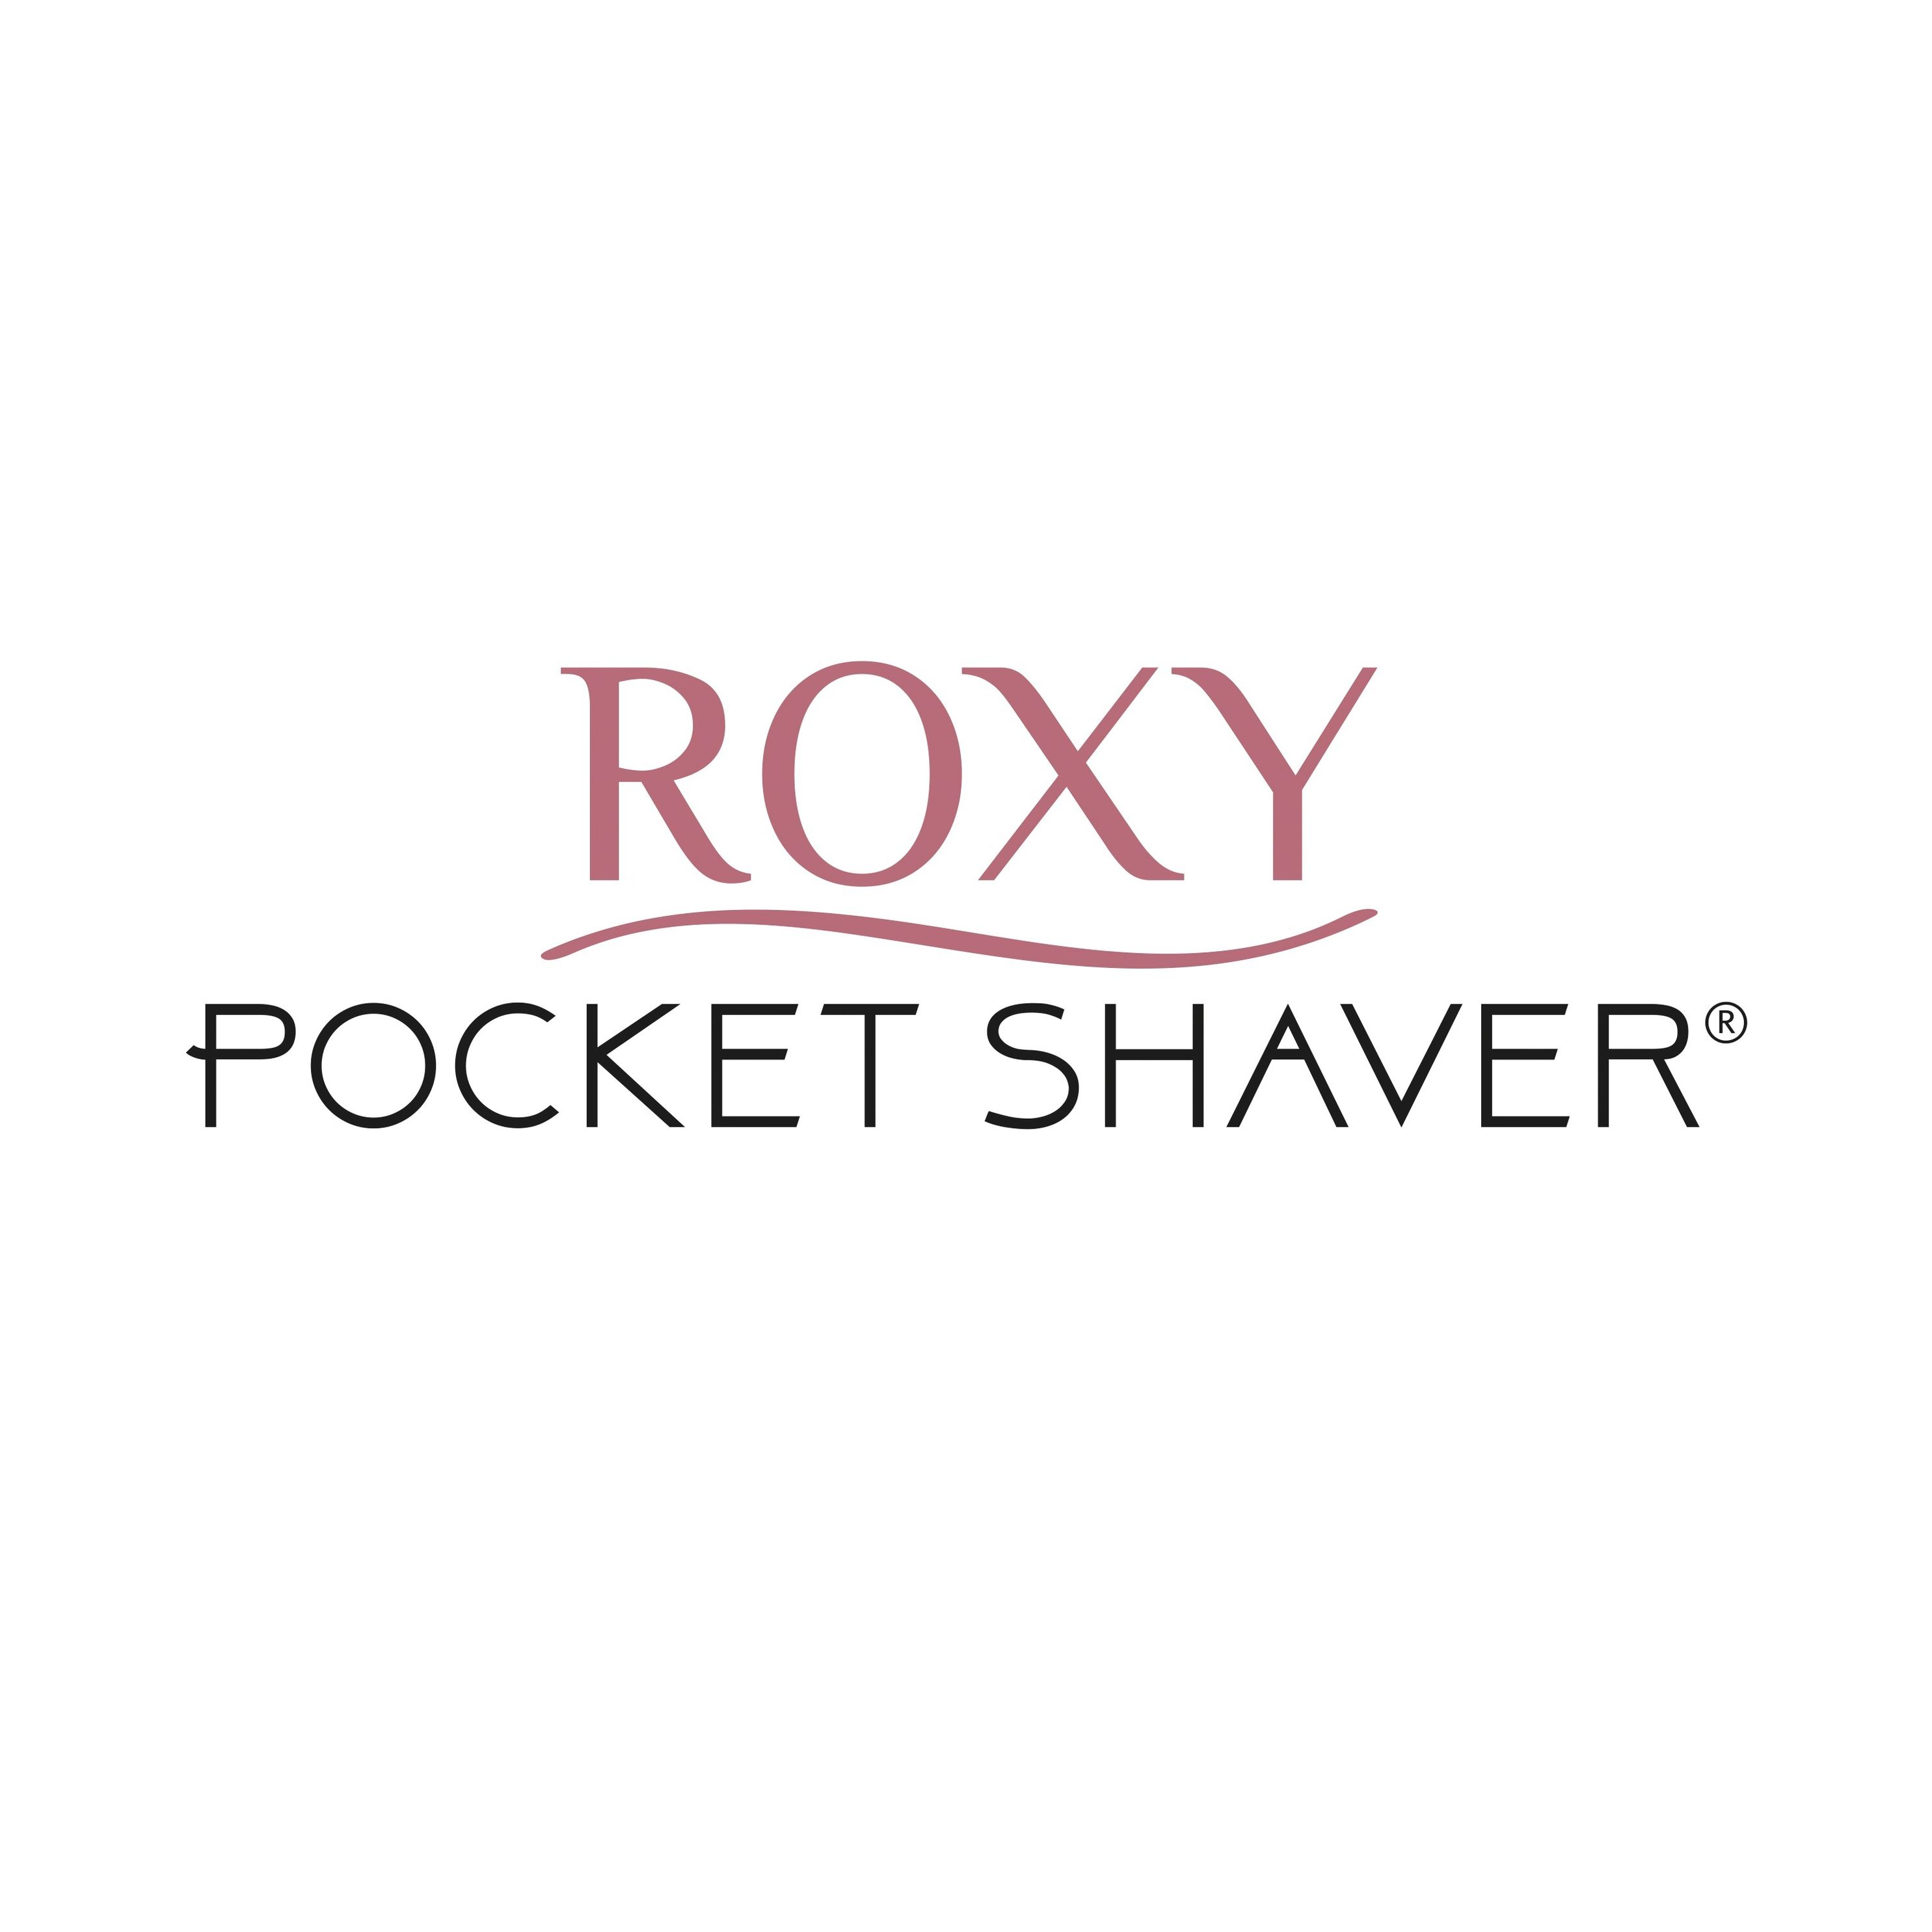 gek Werkelijk Idioot Kommentare zu Roxy Pocket Shaver - Weltbild.de